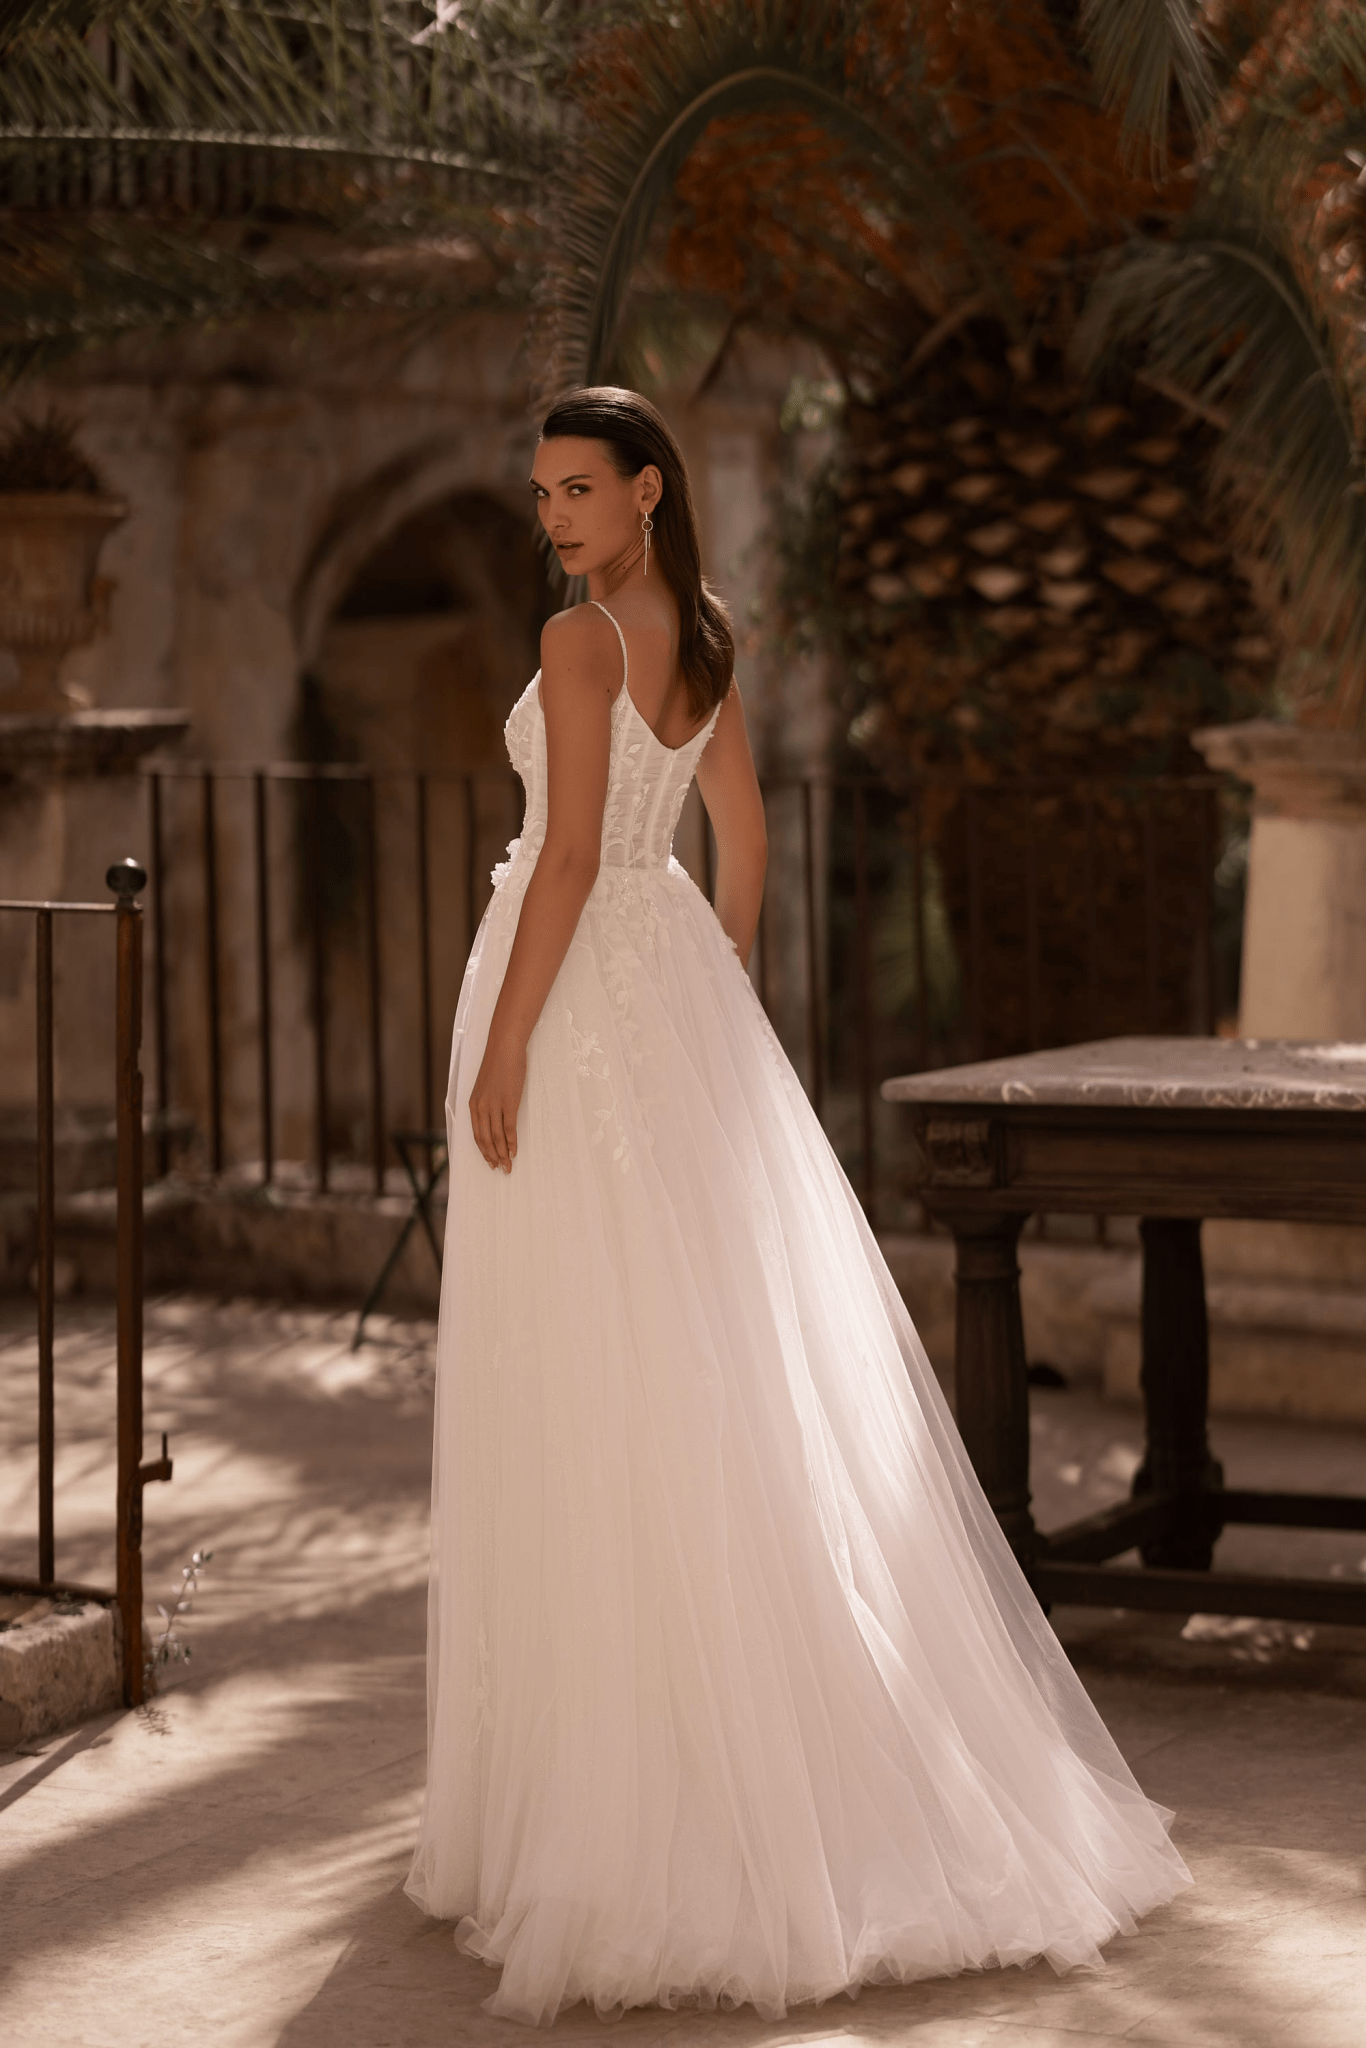 Floral Wedding Dress with Applique and Sleeveless - Modern Wedding Dress with Spaghetti Straps Plus Size - WonderlandByLilian